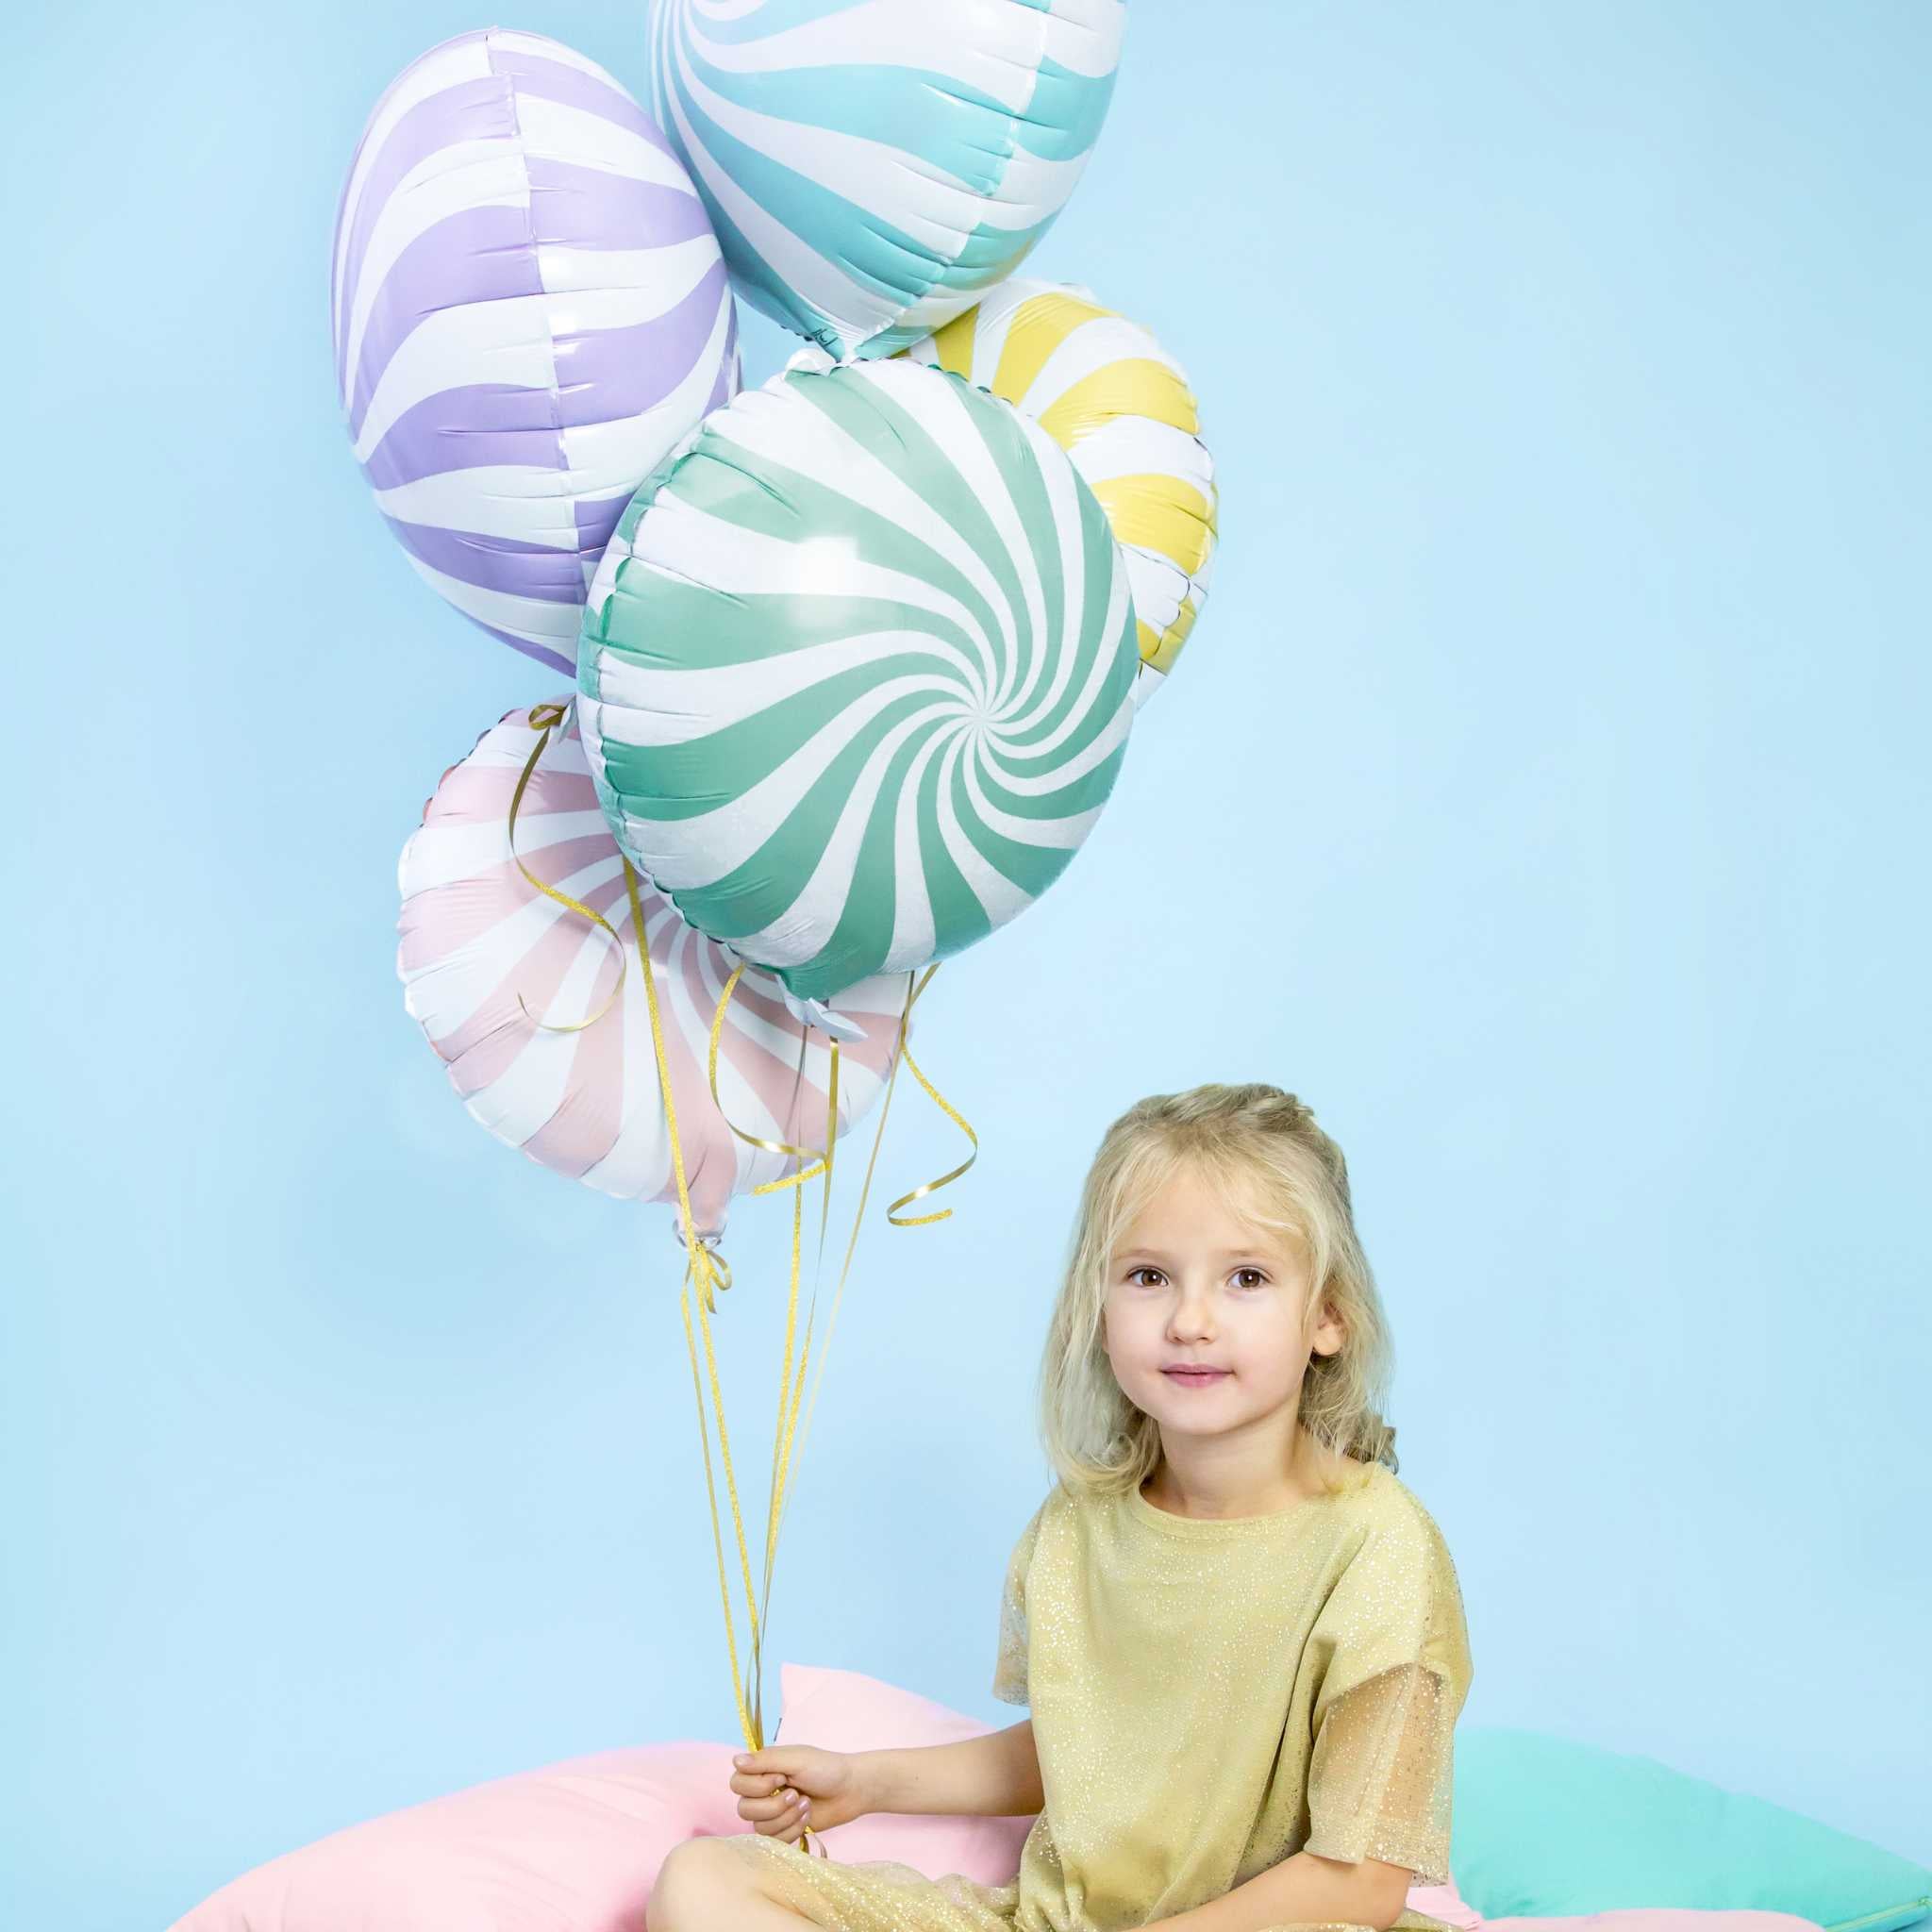 Folienballon Bonbon mint -hey-Party.de- Folienballons -#Variante_